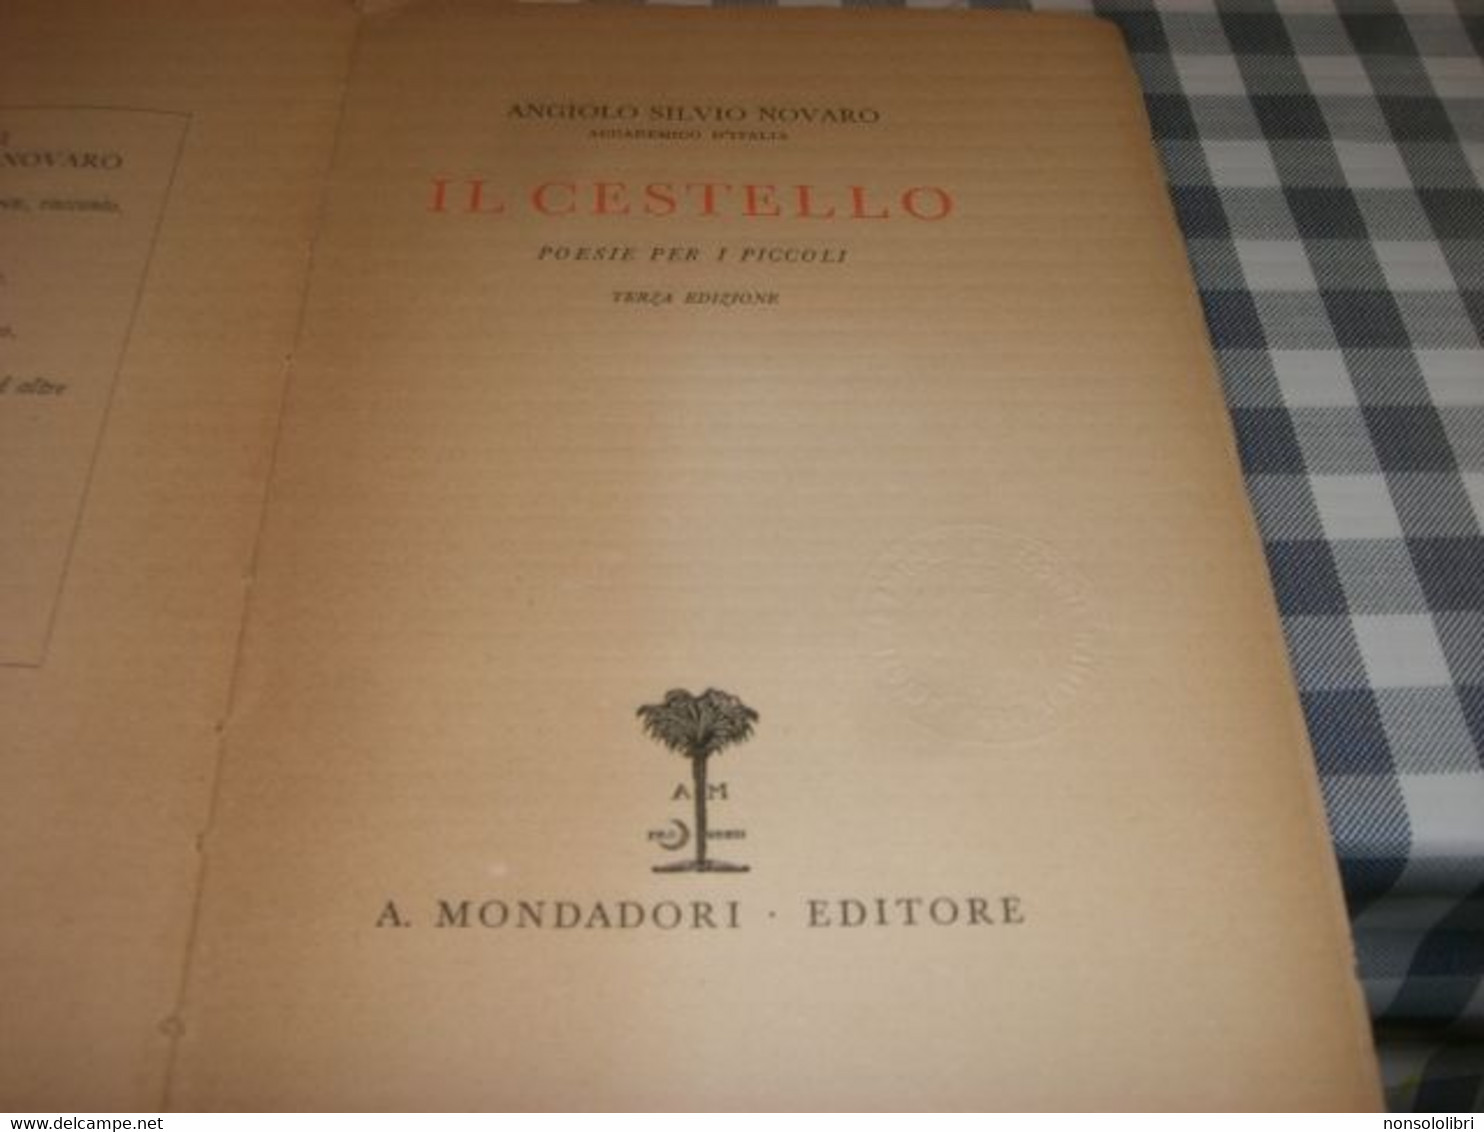 LIBRO IL CESTELLO -ANGIOLO SILVIO NOVARO -MONDADORI 1928- TERZA EDIZIONE - Erzählungen, Kurzgeschichten